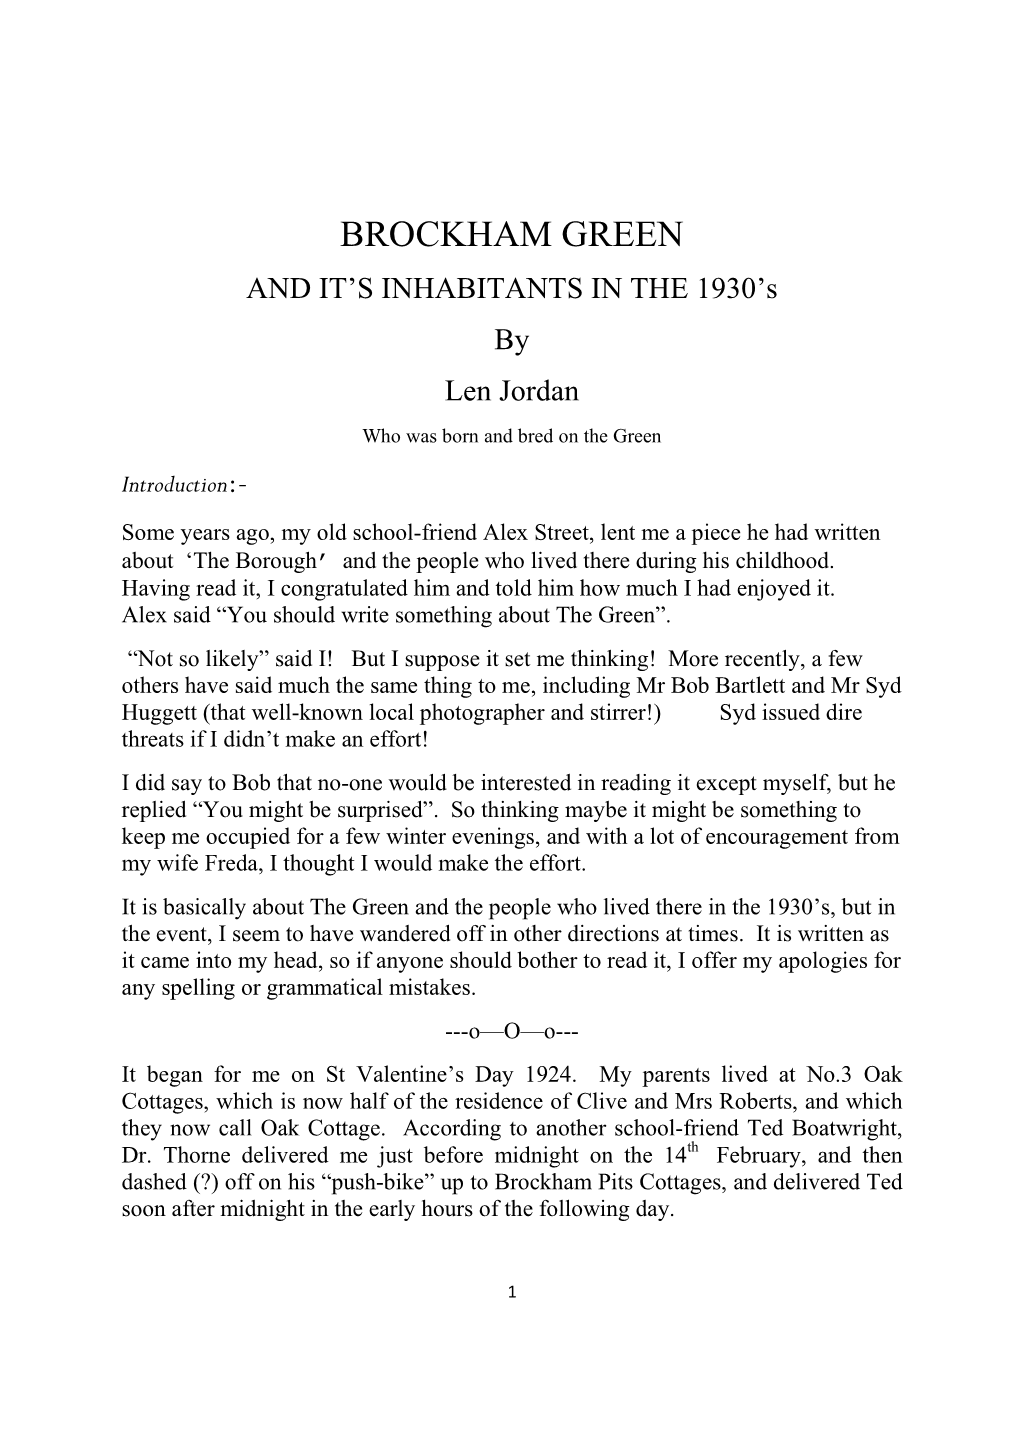 BROCKHAM GREEN by Len Jordan